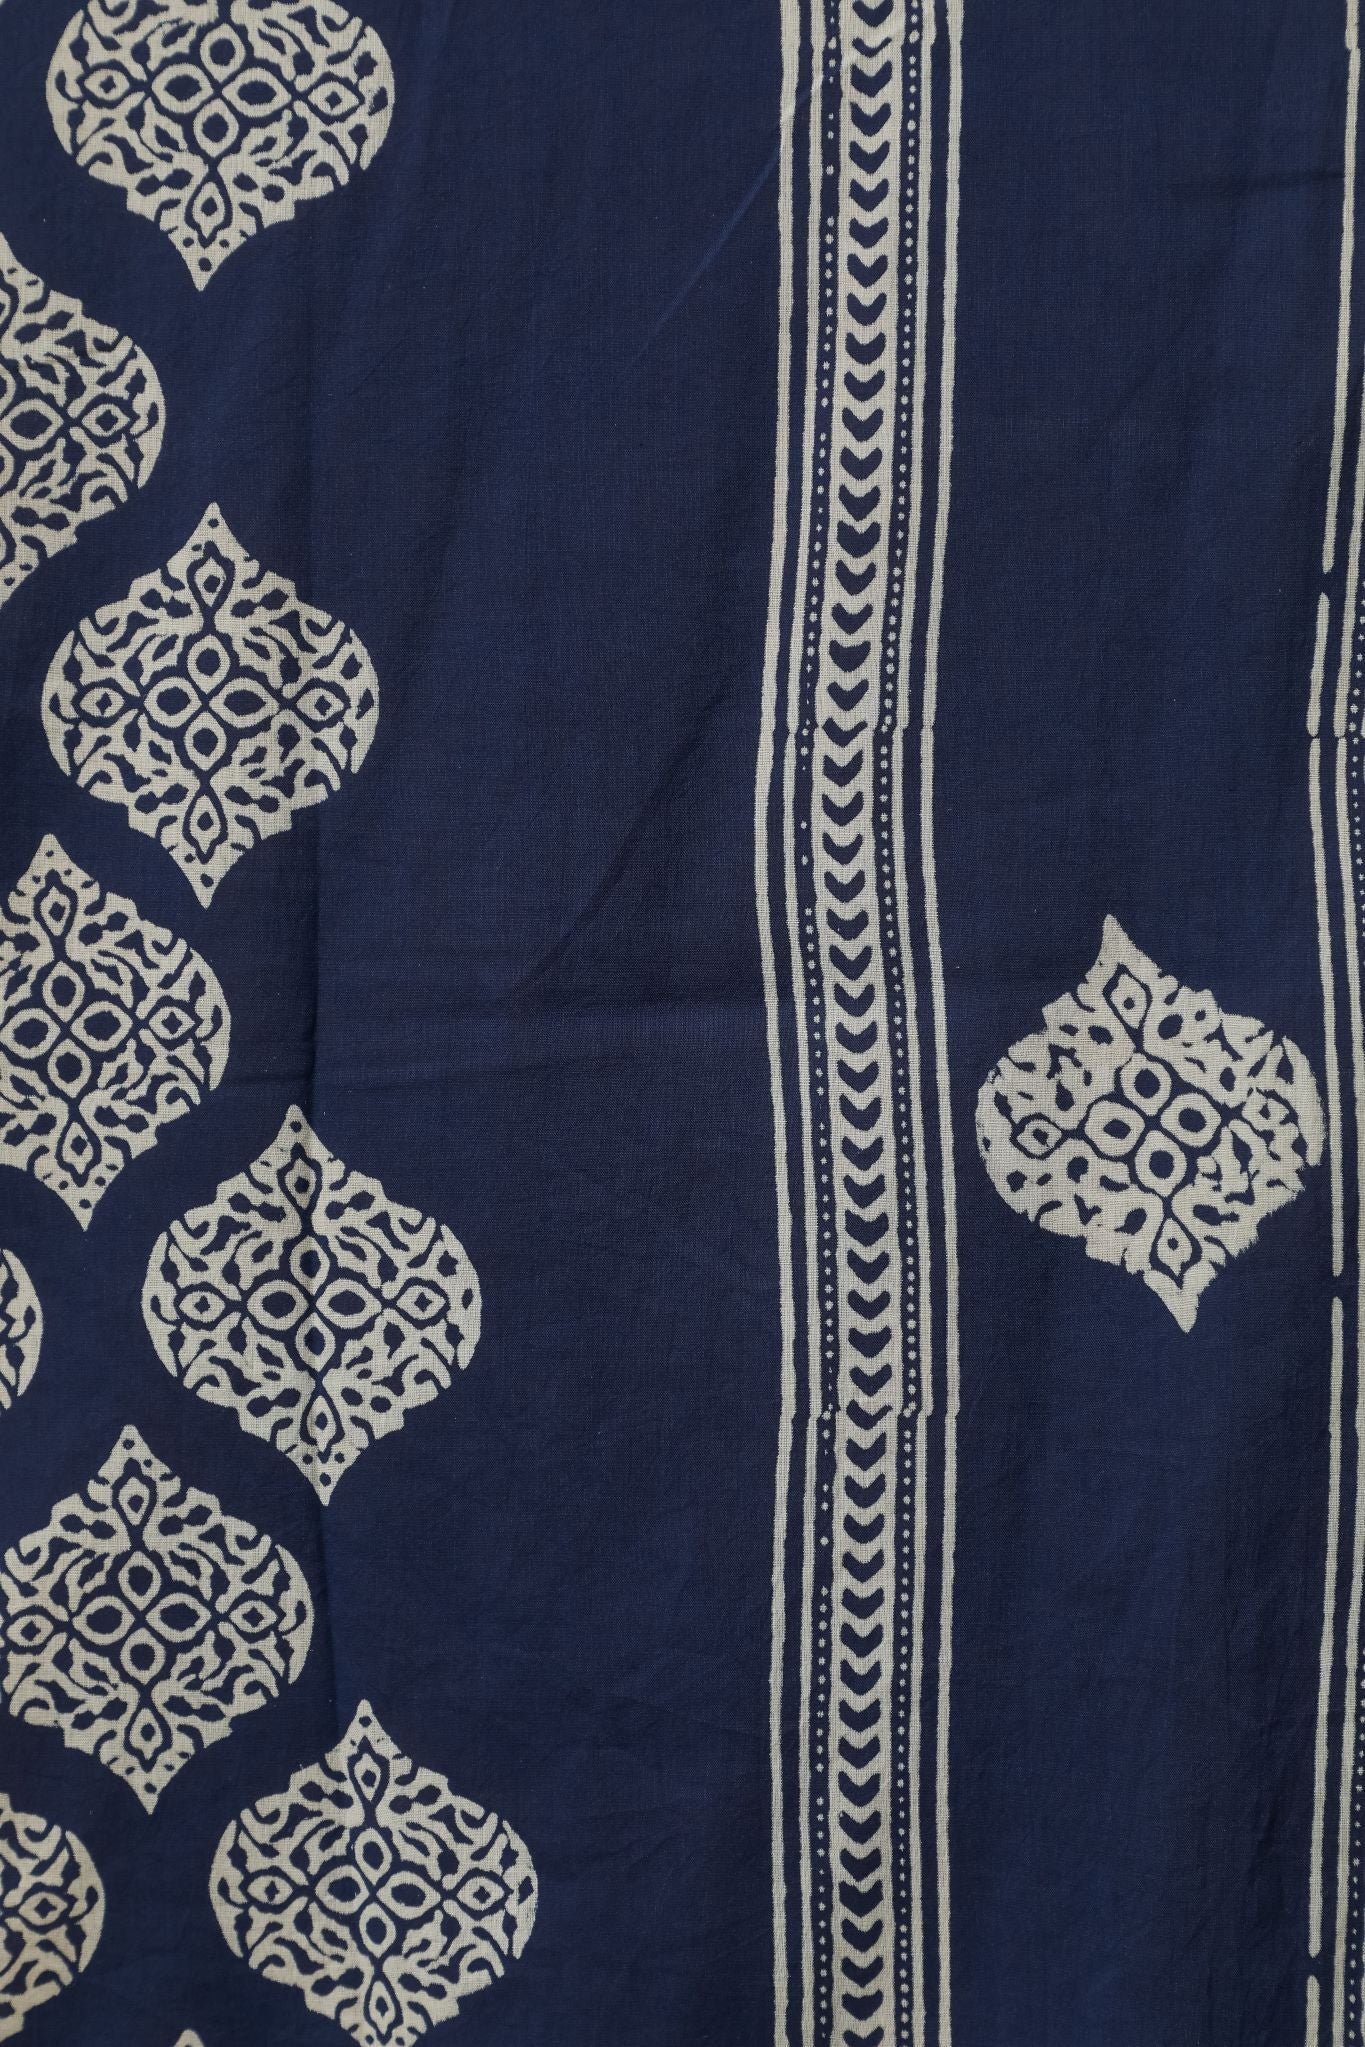 SootiSyahi 'Bluestars' Handblock Printed Cotton Window Curtain